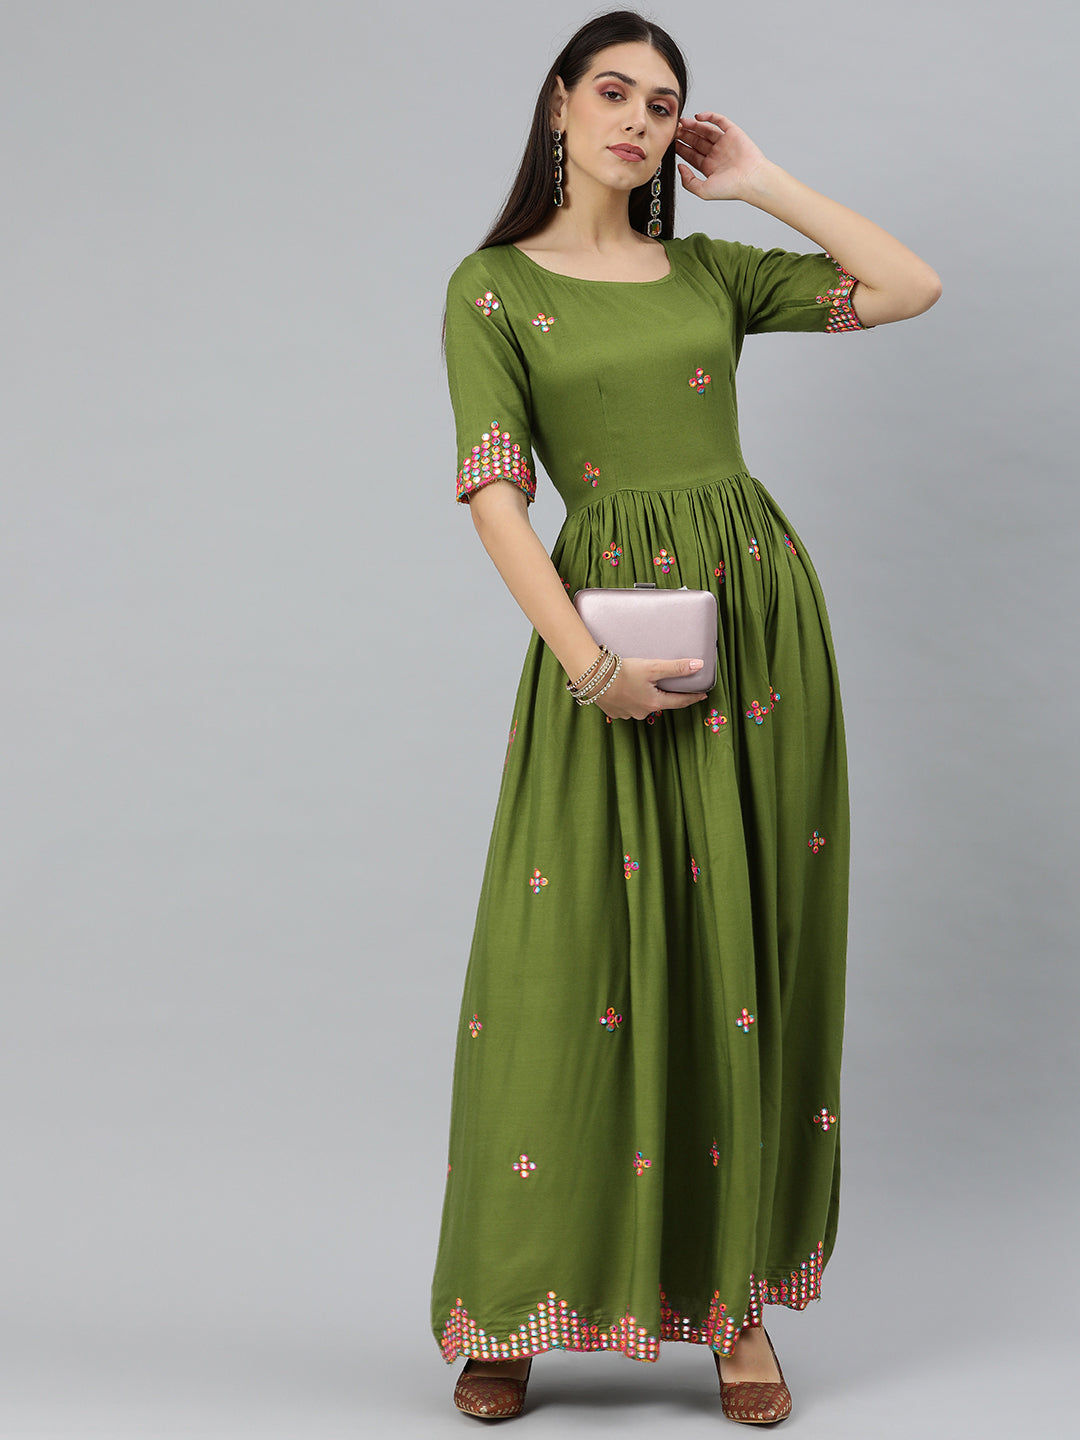 Christabel Dark Green Maxi Dress |